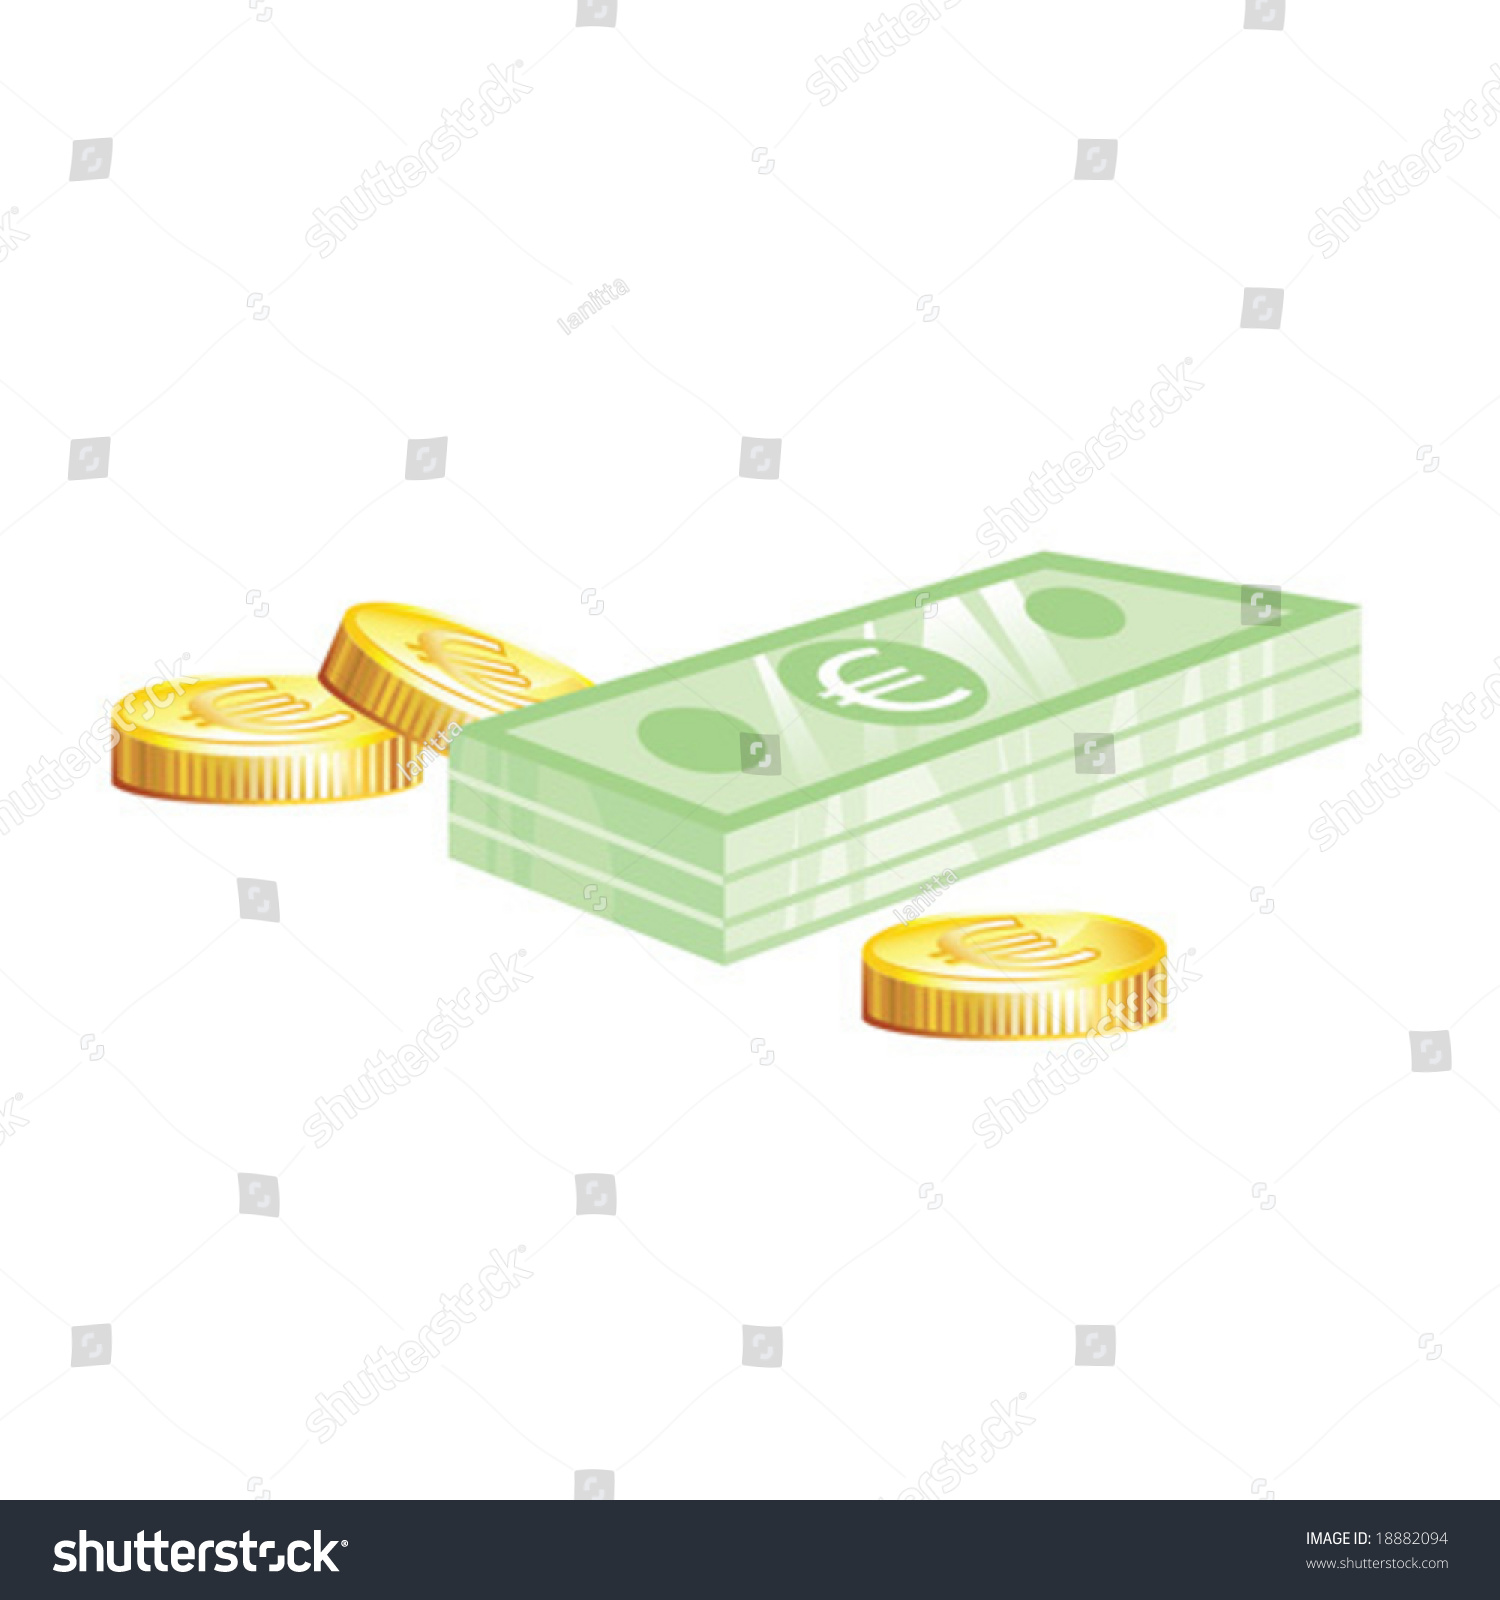 money clipart vector - photo #34